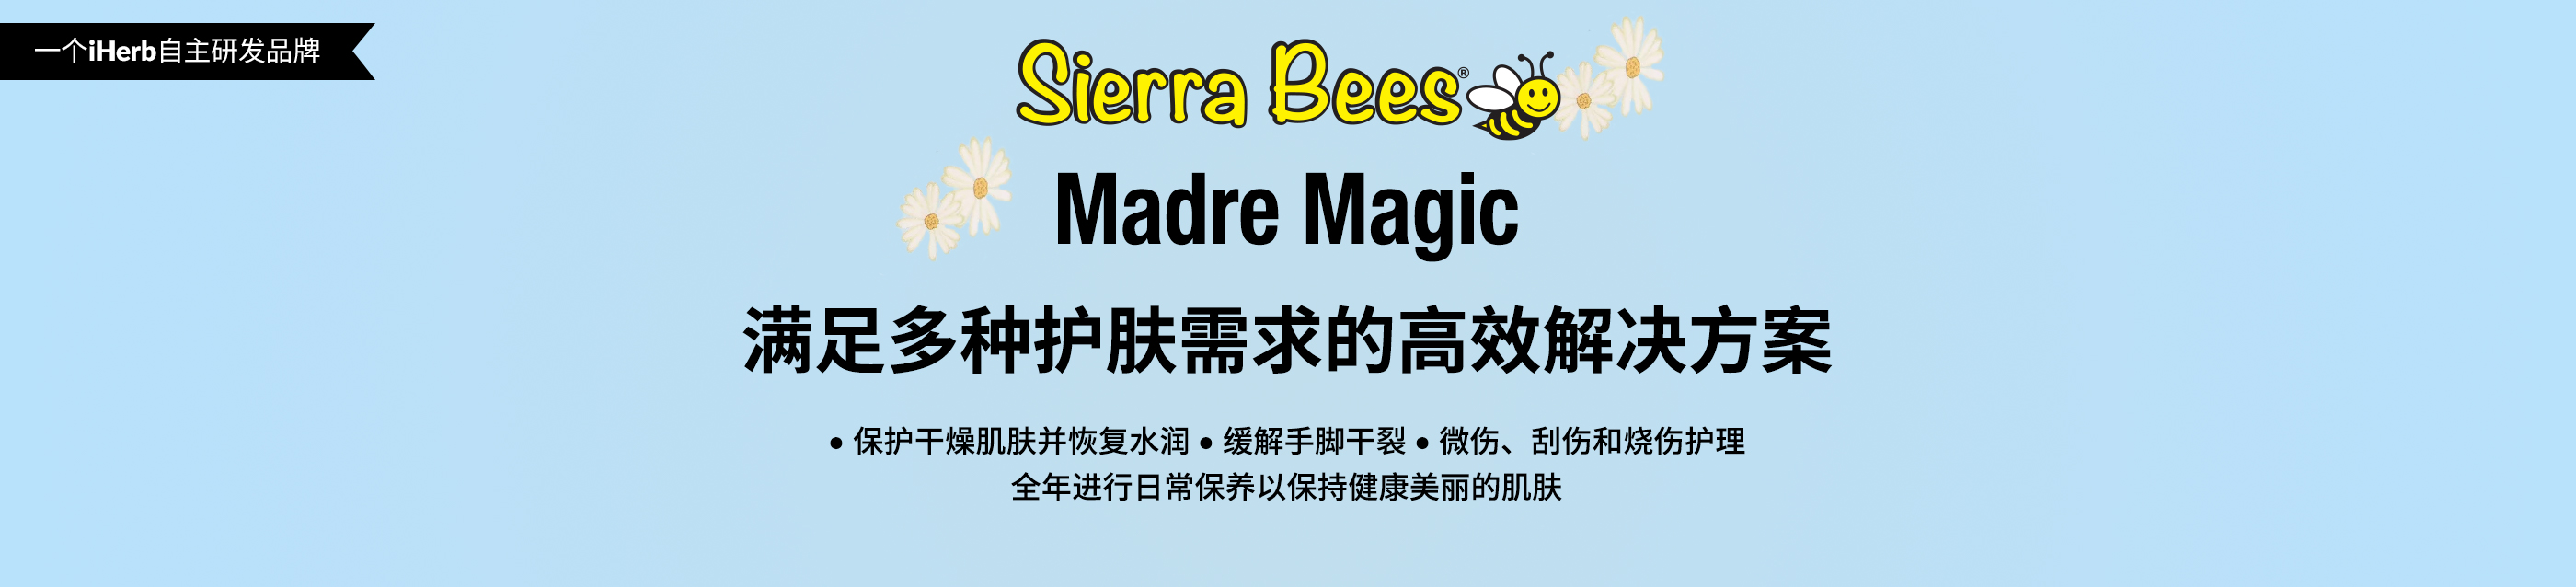 Sierra Bees Madre Magic